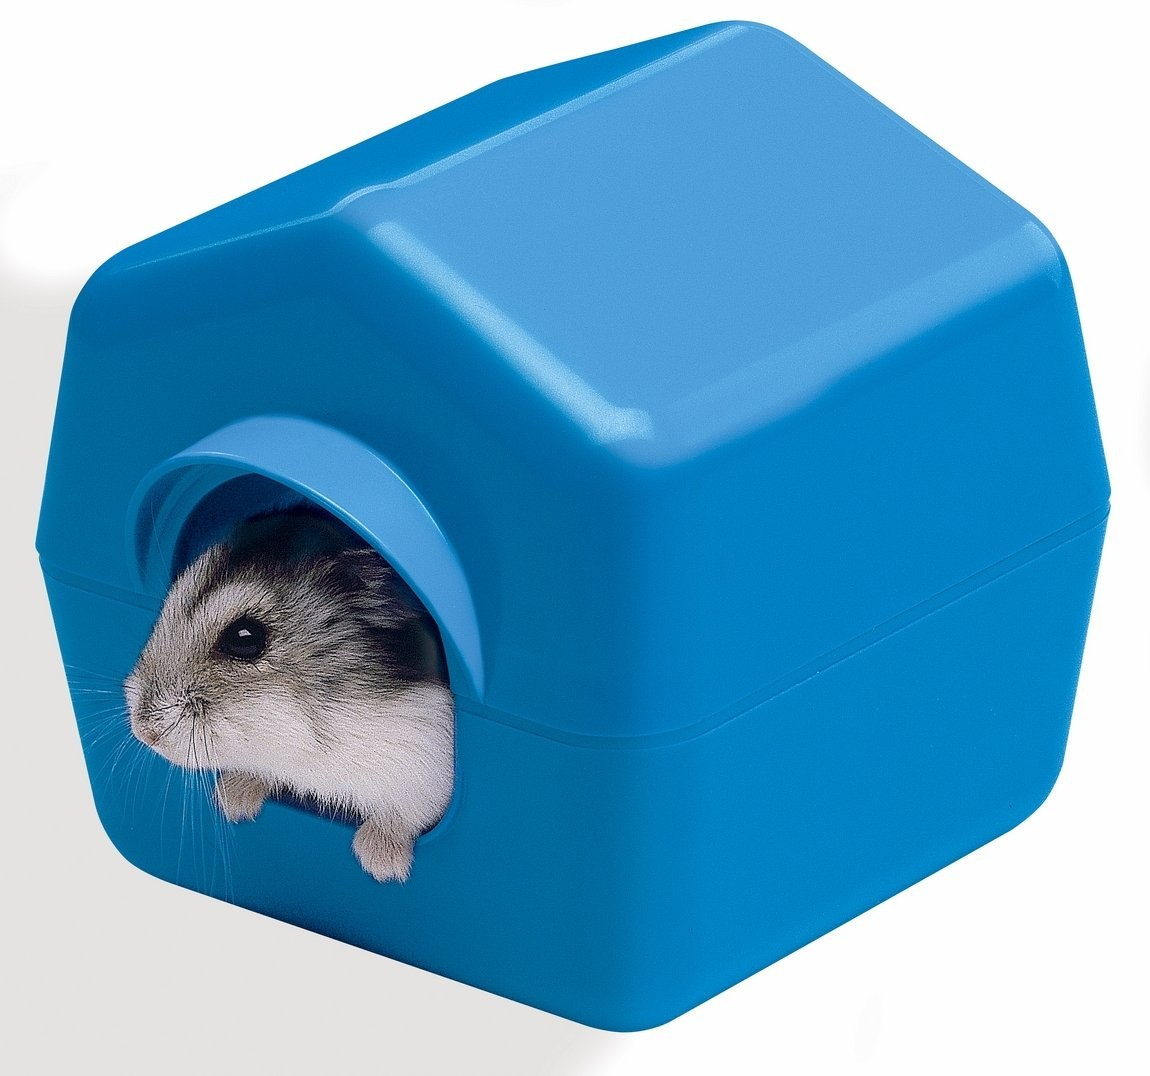  Caseta de plástico para hamster 